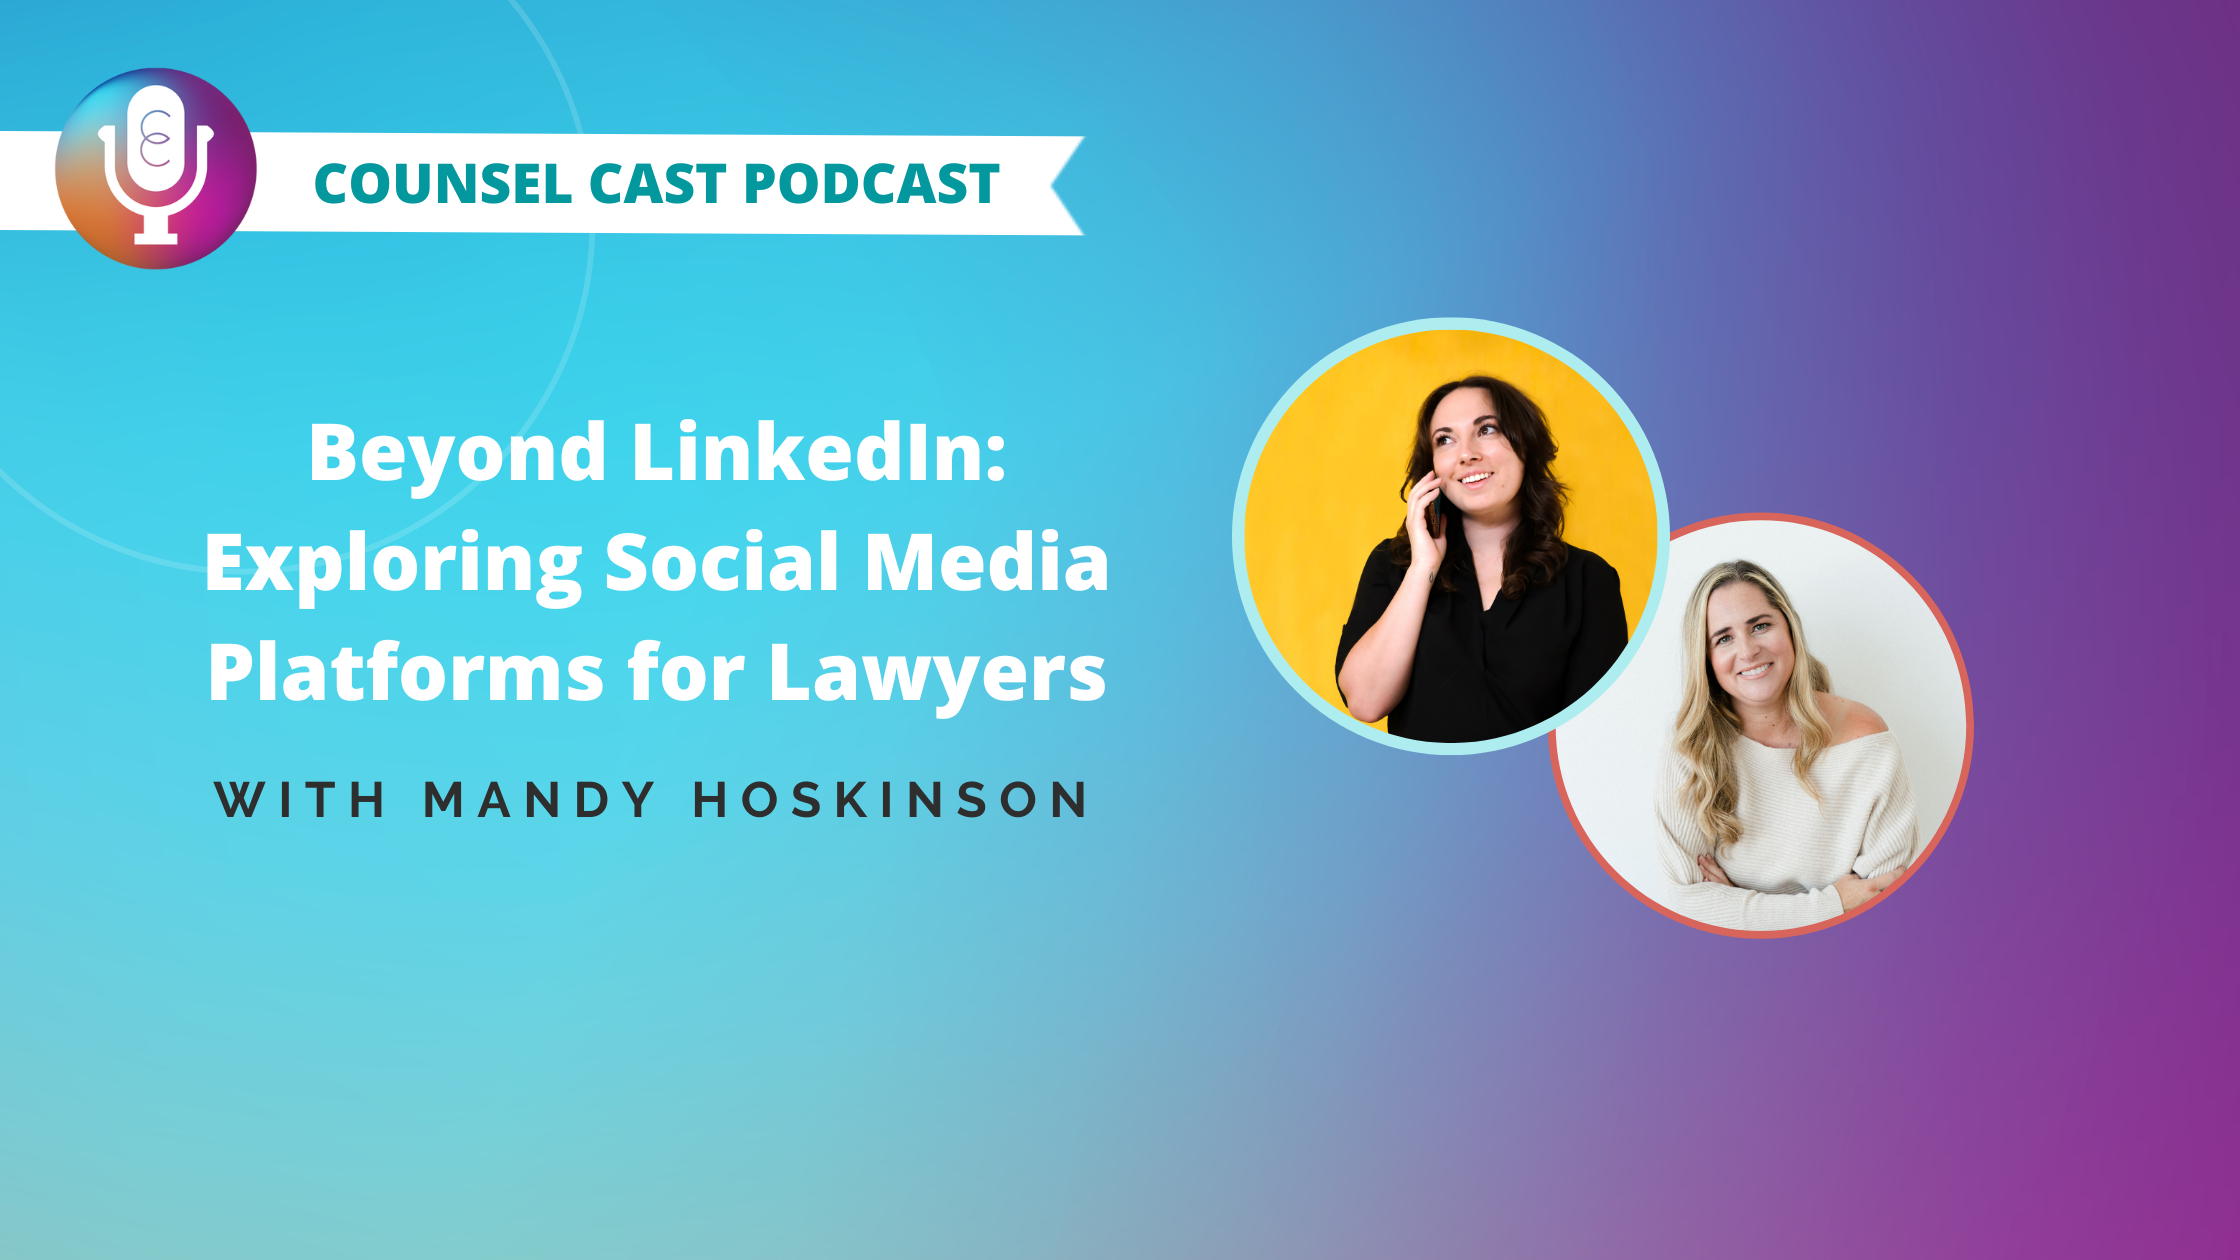 Beyond LinkedIn: Exploring Social Media Platforms for Lawyers with Mandy Hoskinson